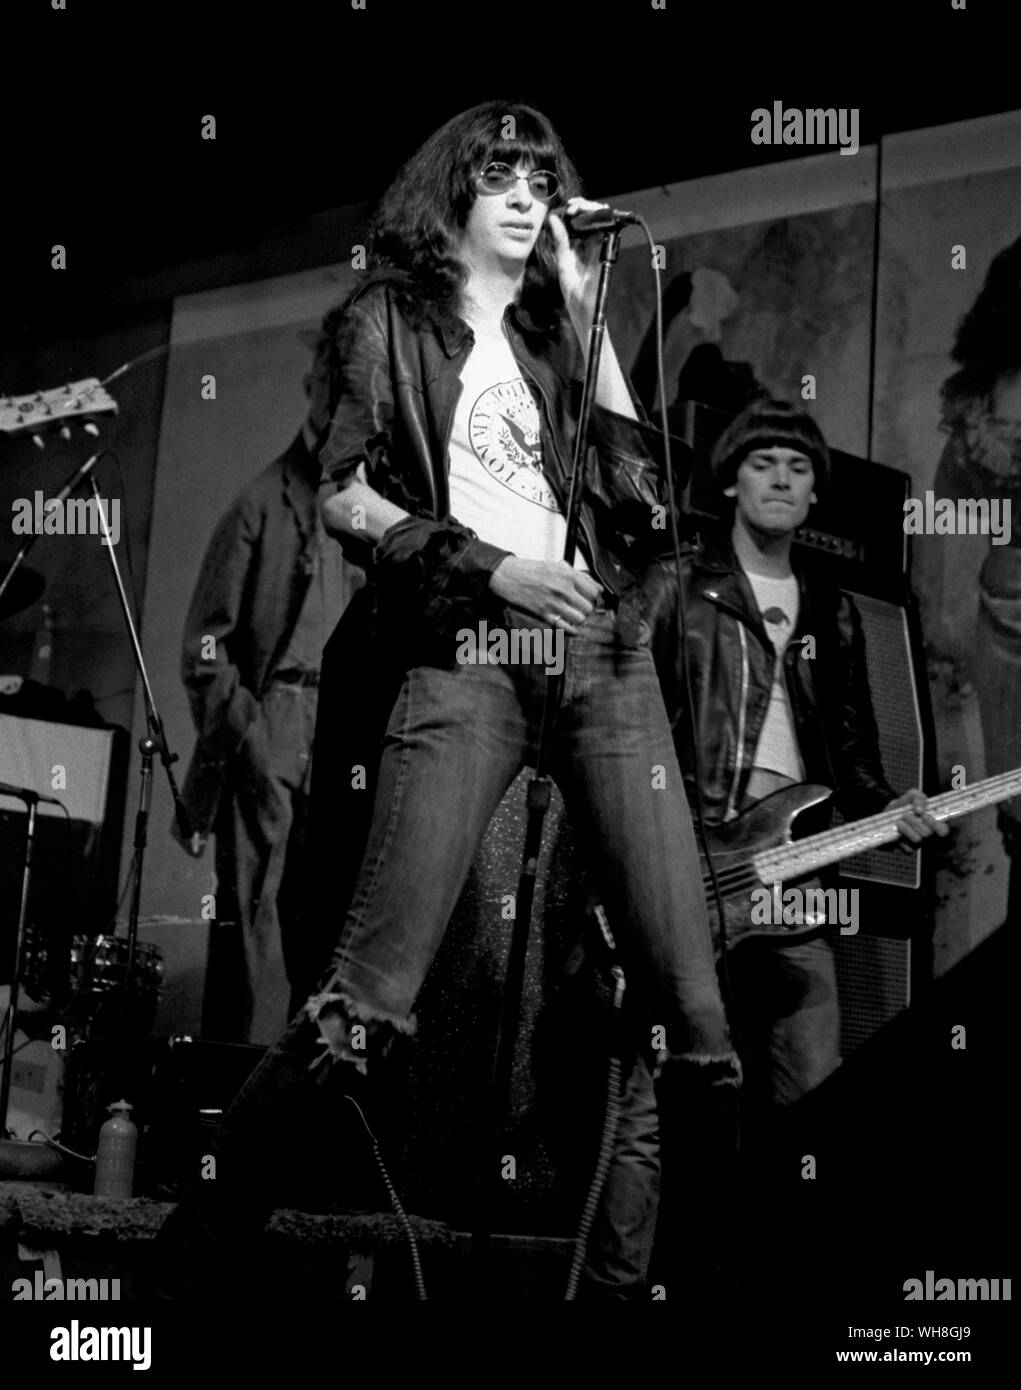 The Ramones perform at CBGB in 1977 Stock Photo